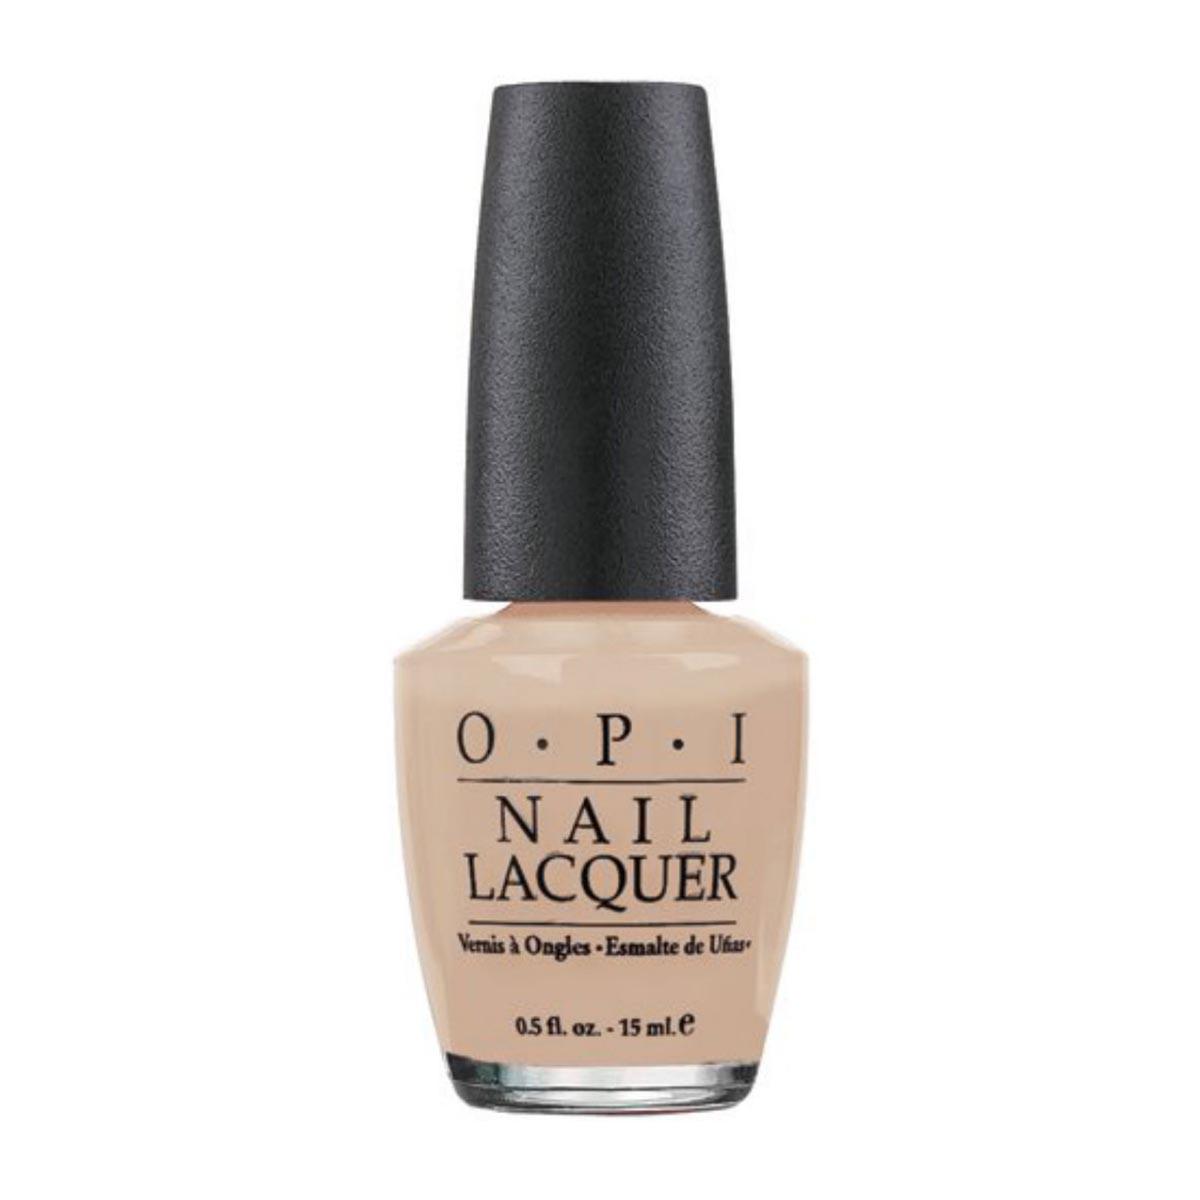 opi-nail-lacquer-nlp61-samoan-sand